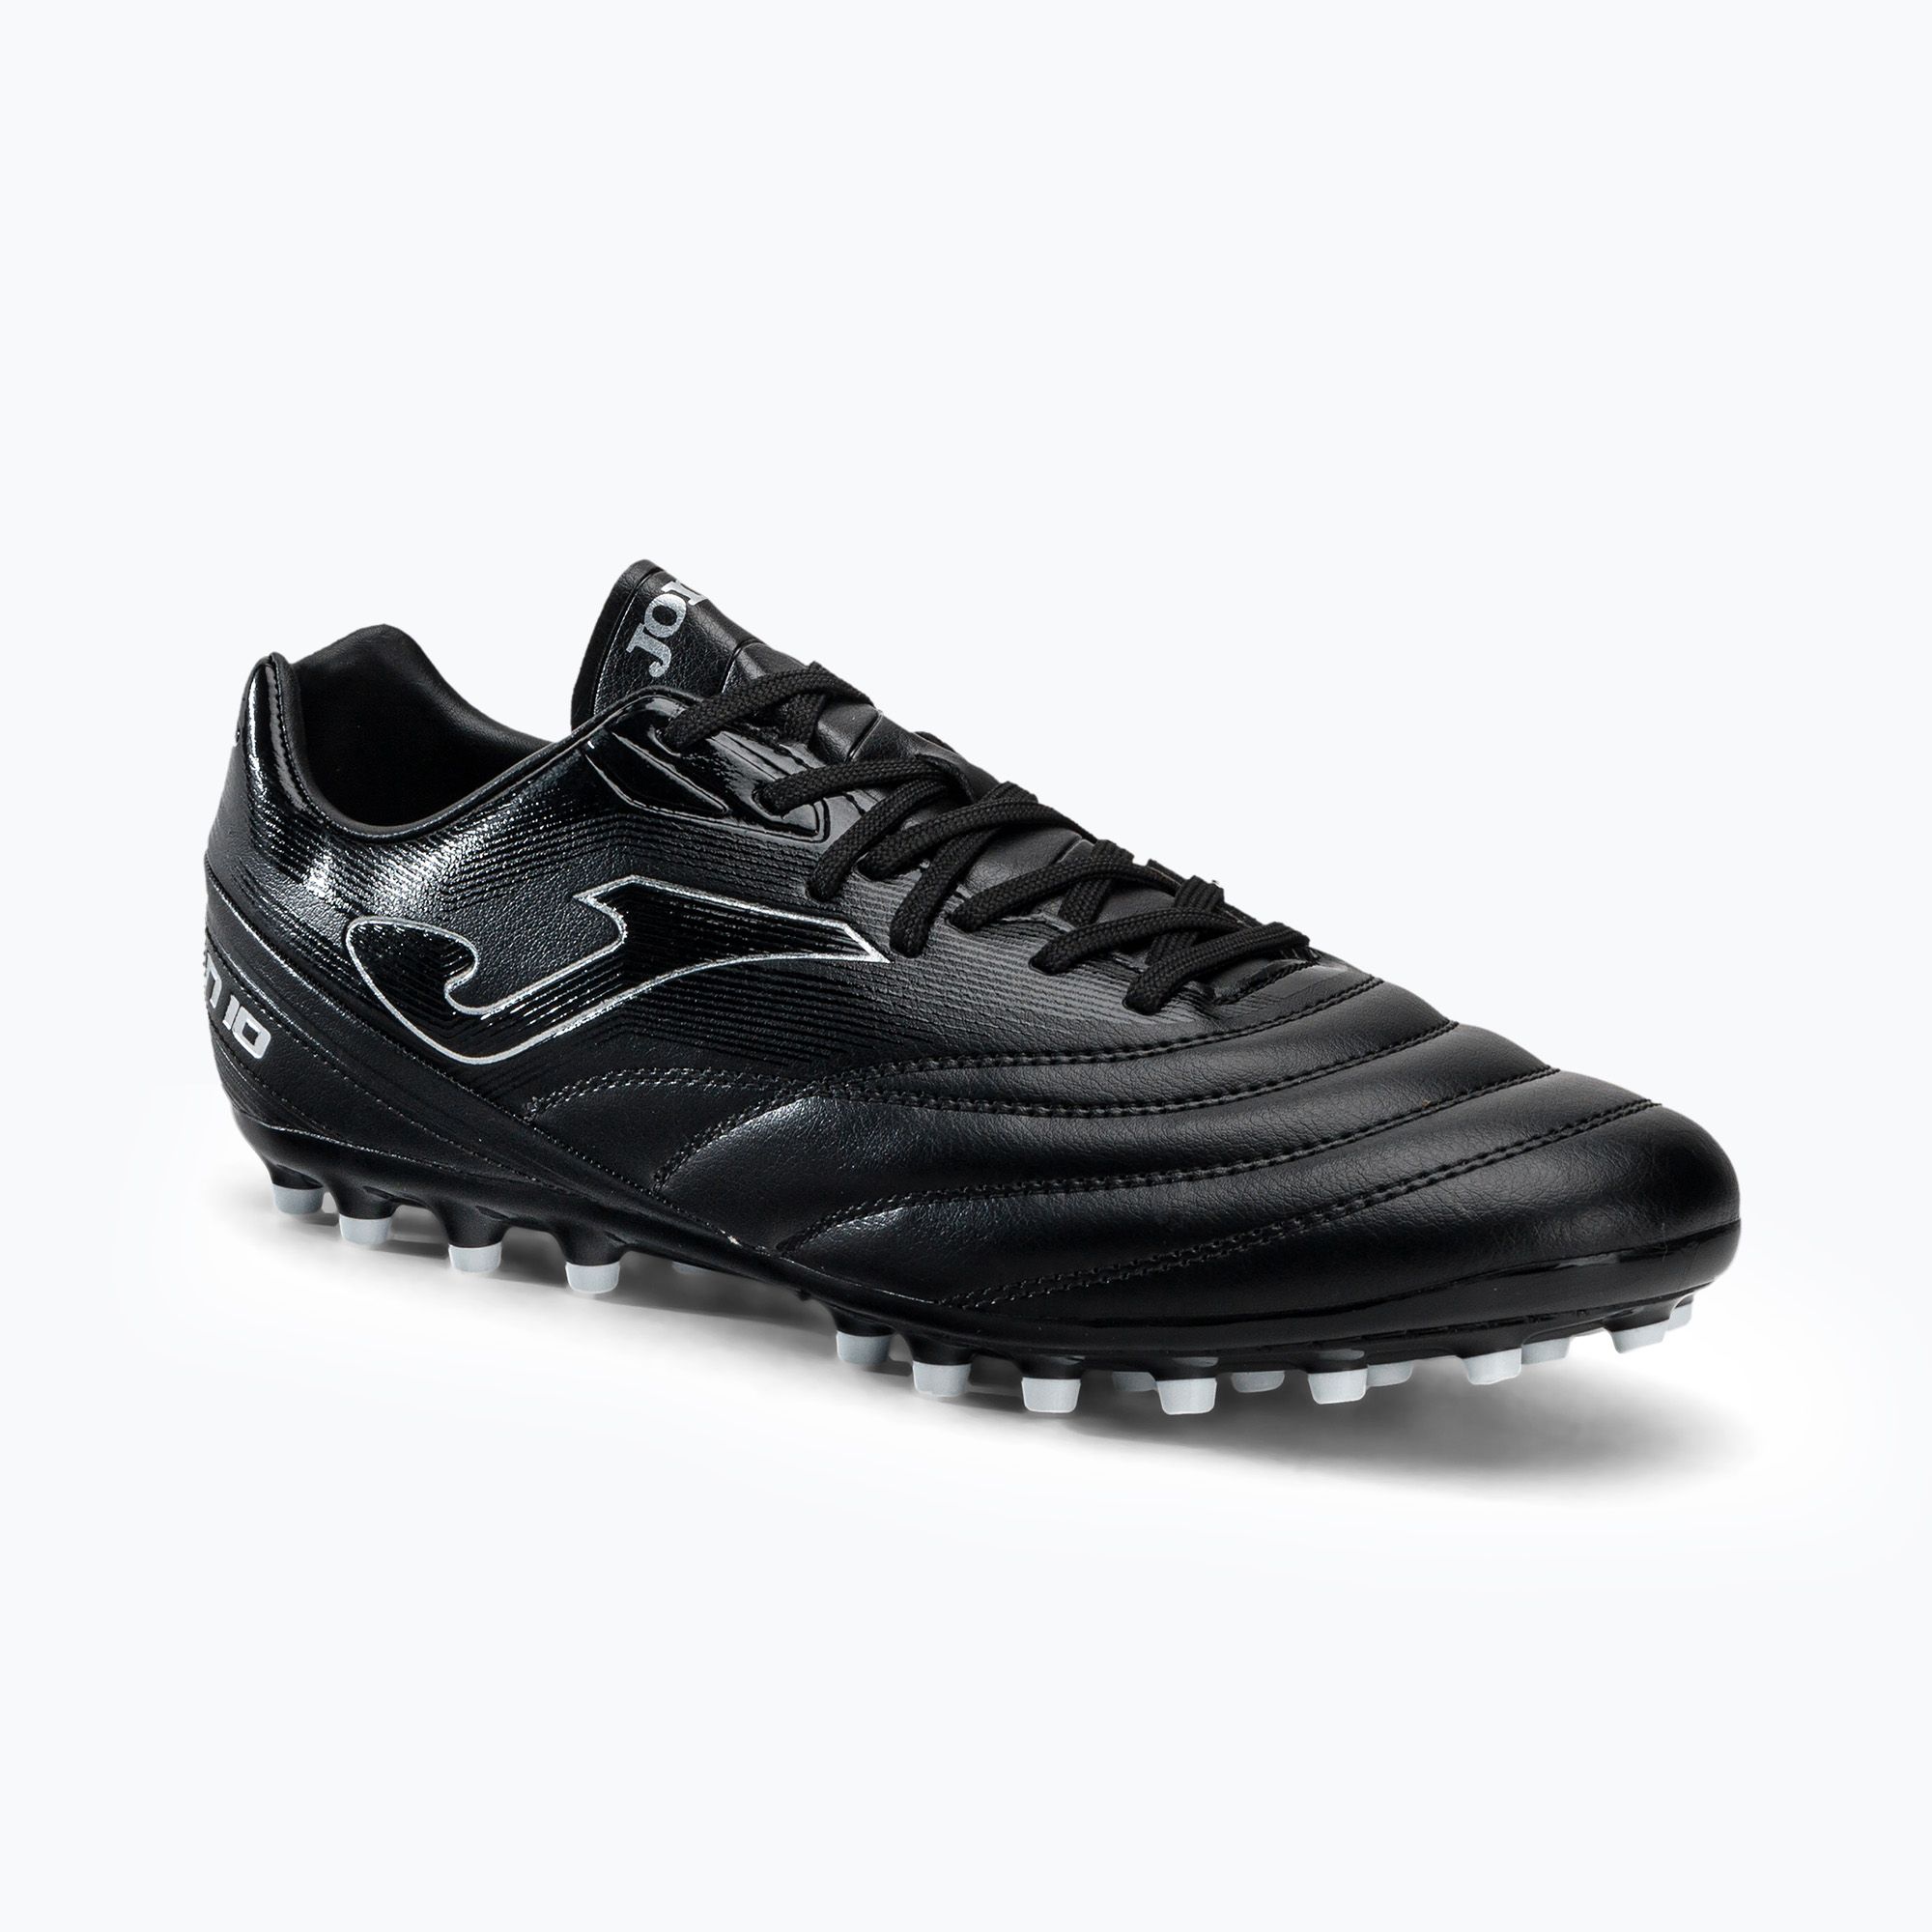 Buty piłkarskie męskie Joma Numero-10 AG black